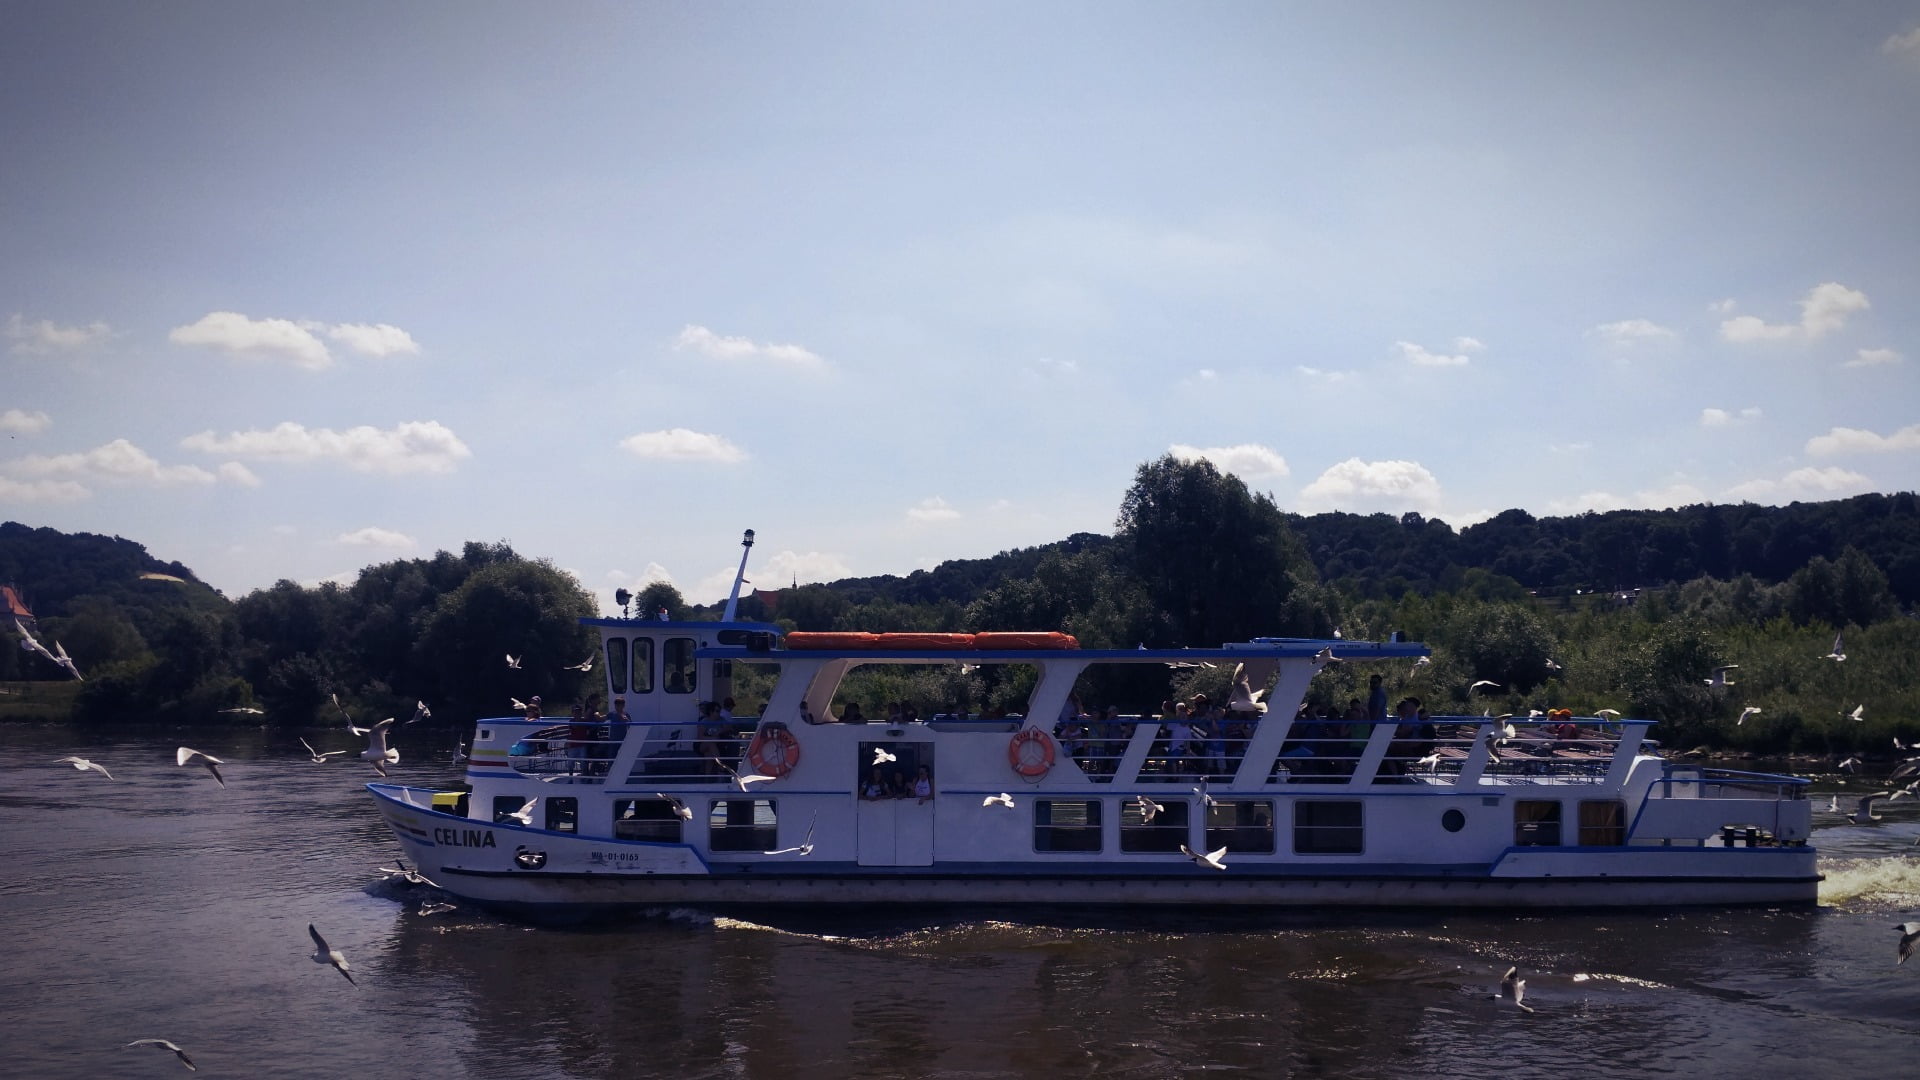 Poland, boat, river, Vistula, transportation, mode of transportation